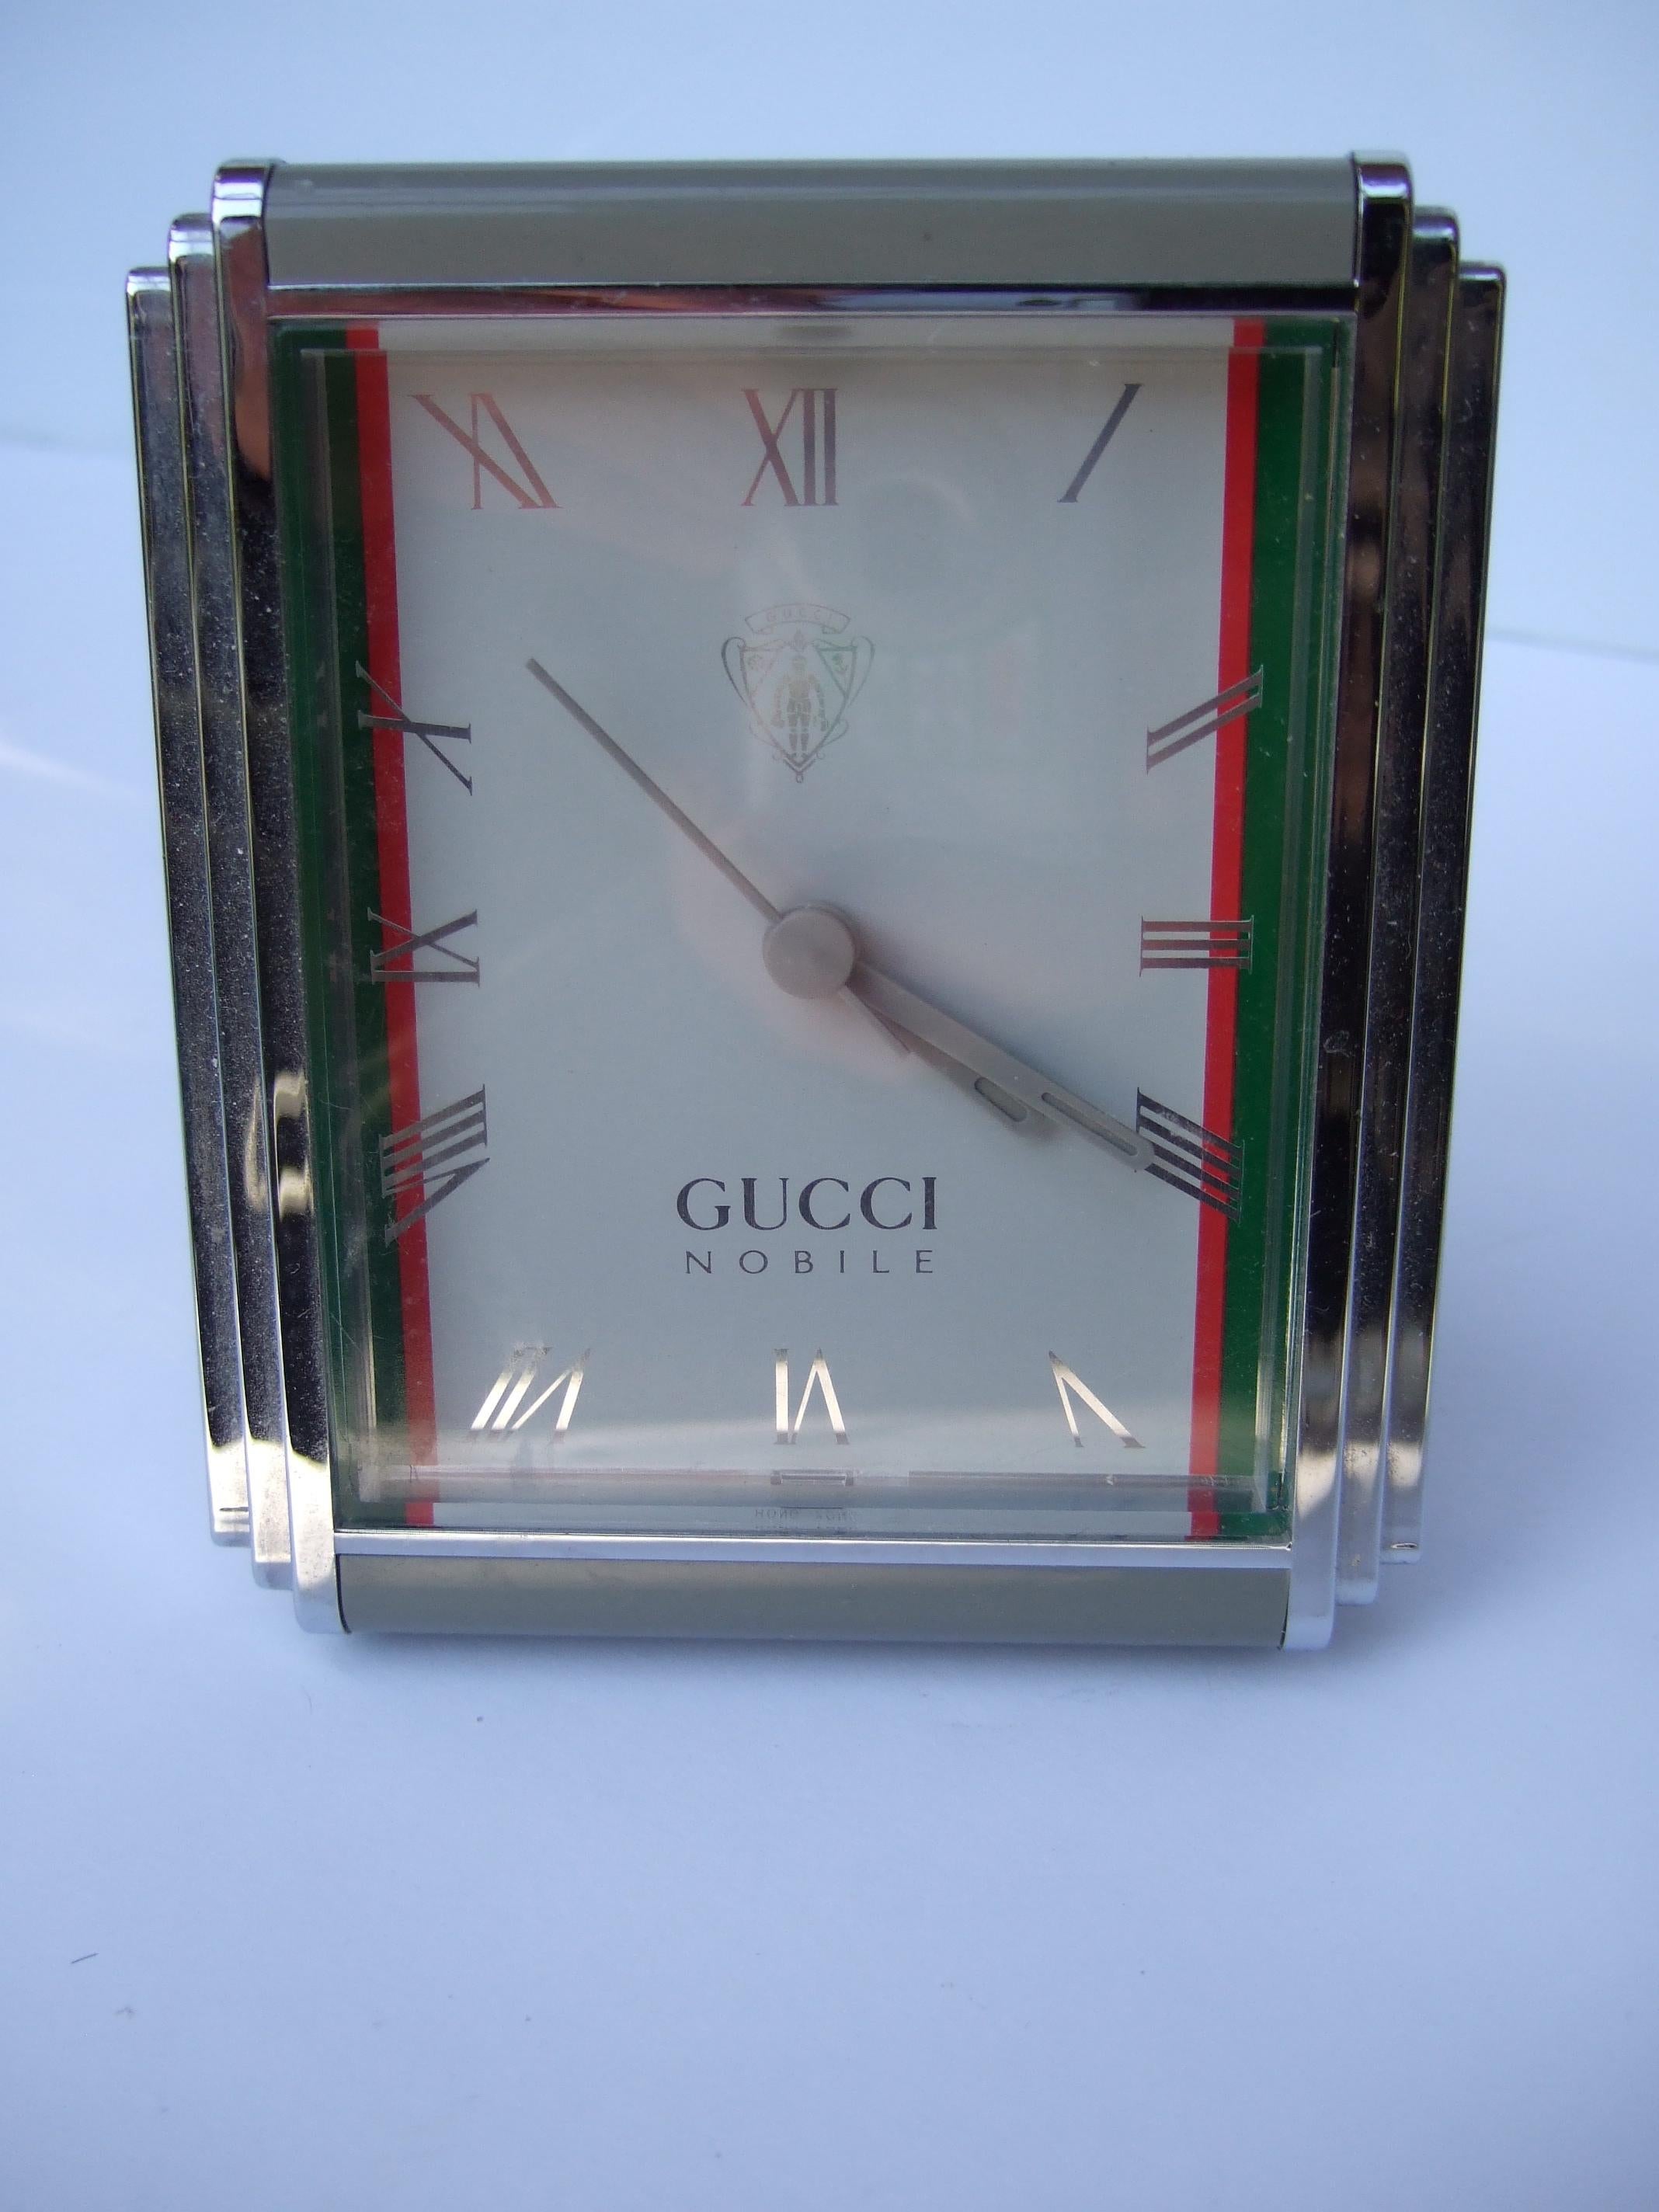 Gucci Nobile Silver Metallic Molded Resin Framed Battery Table Clock c 1980s 2